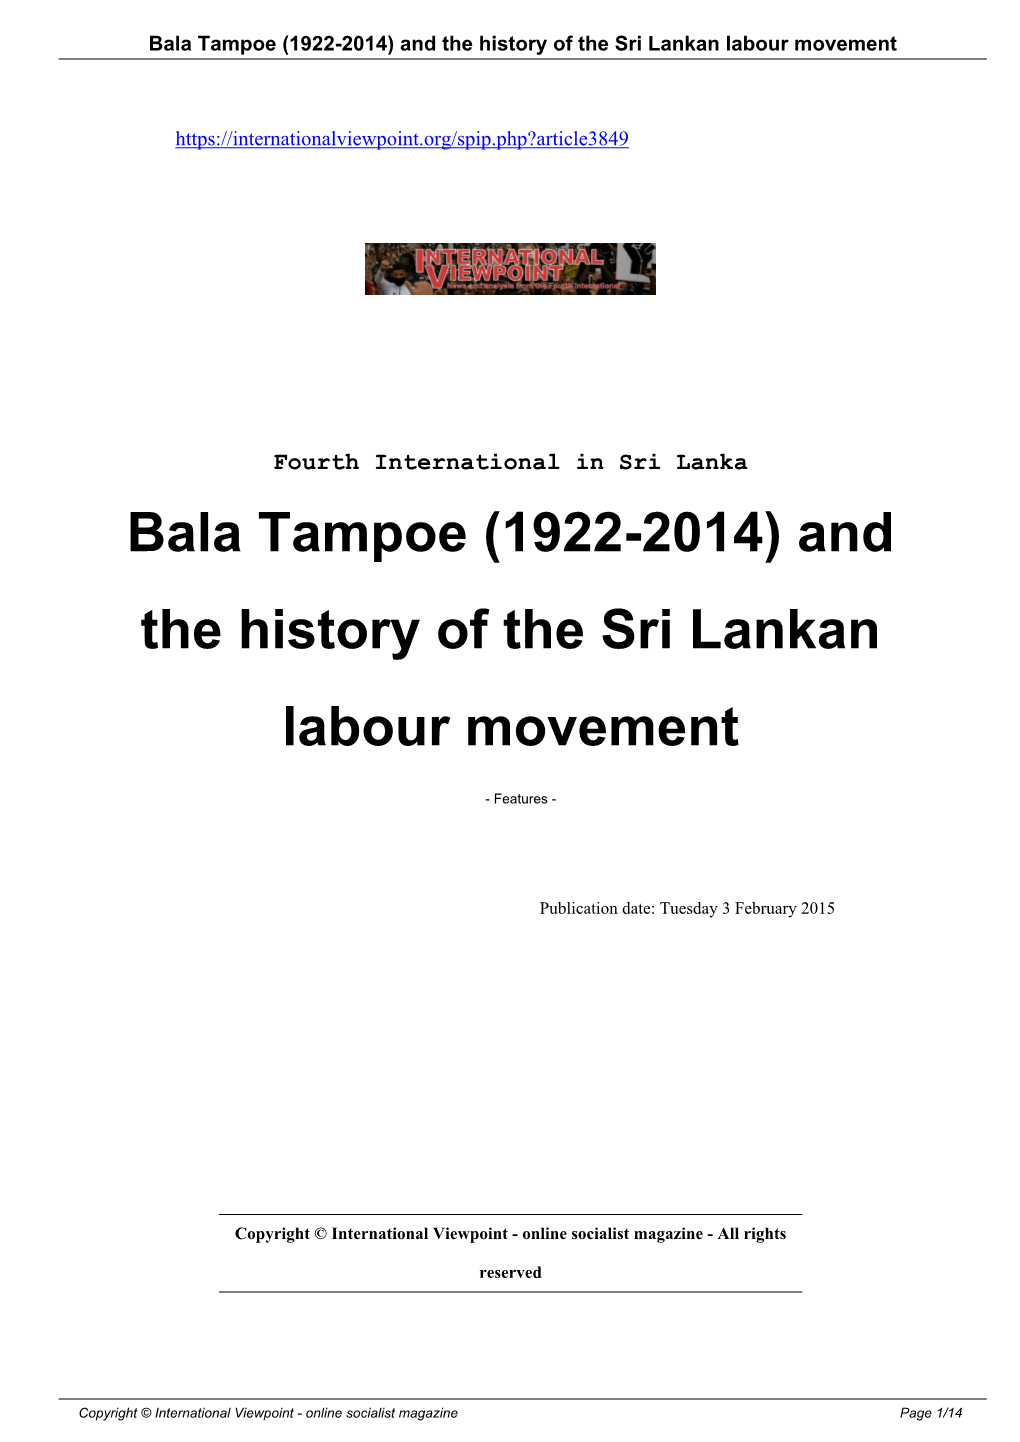 Bala Tampoe (1922-2014) and the History of the Sri Lankan Labour Movement